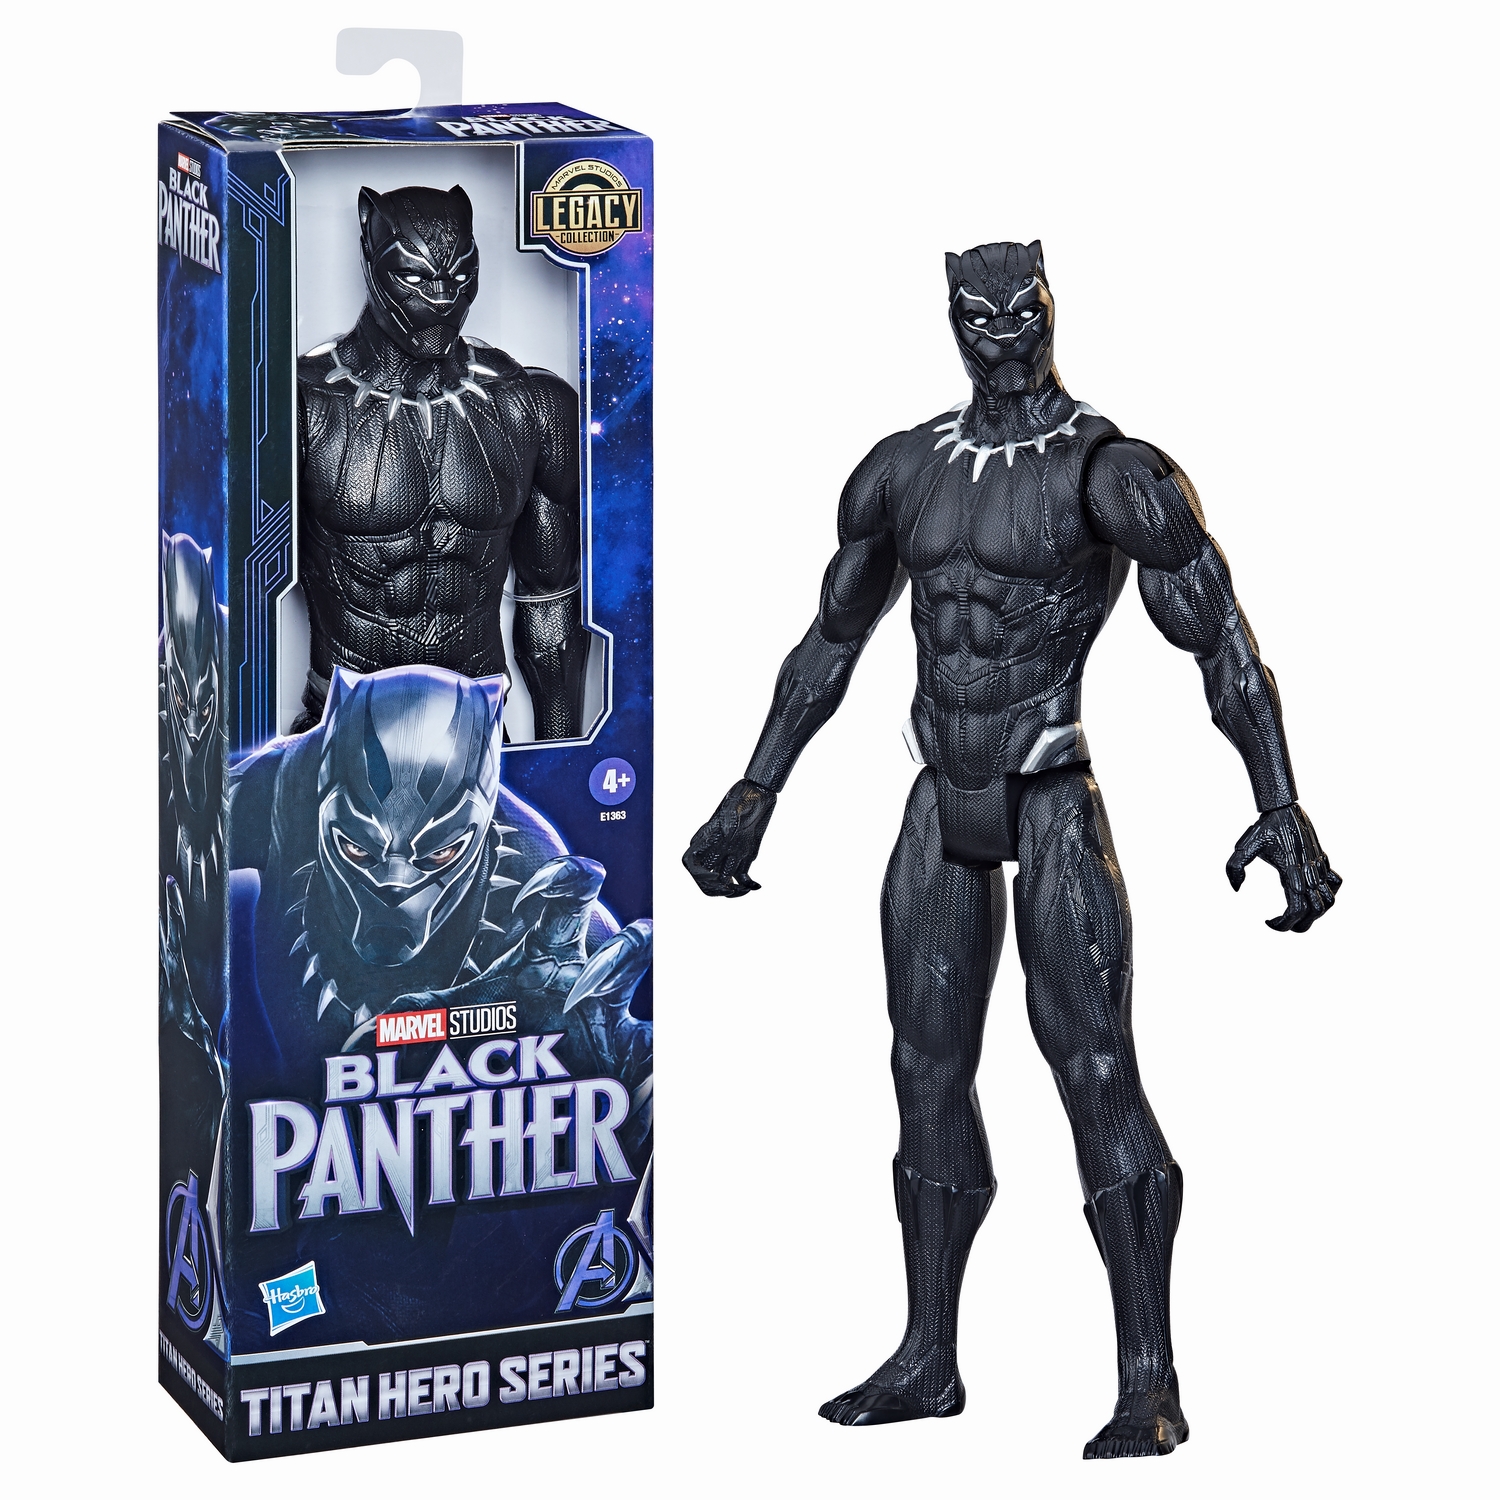 Marvel Black Panther Marvel Studios Legacy Collection Titan Hero Series Black Panther Figure - 1.jpg